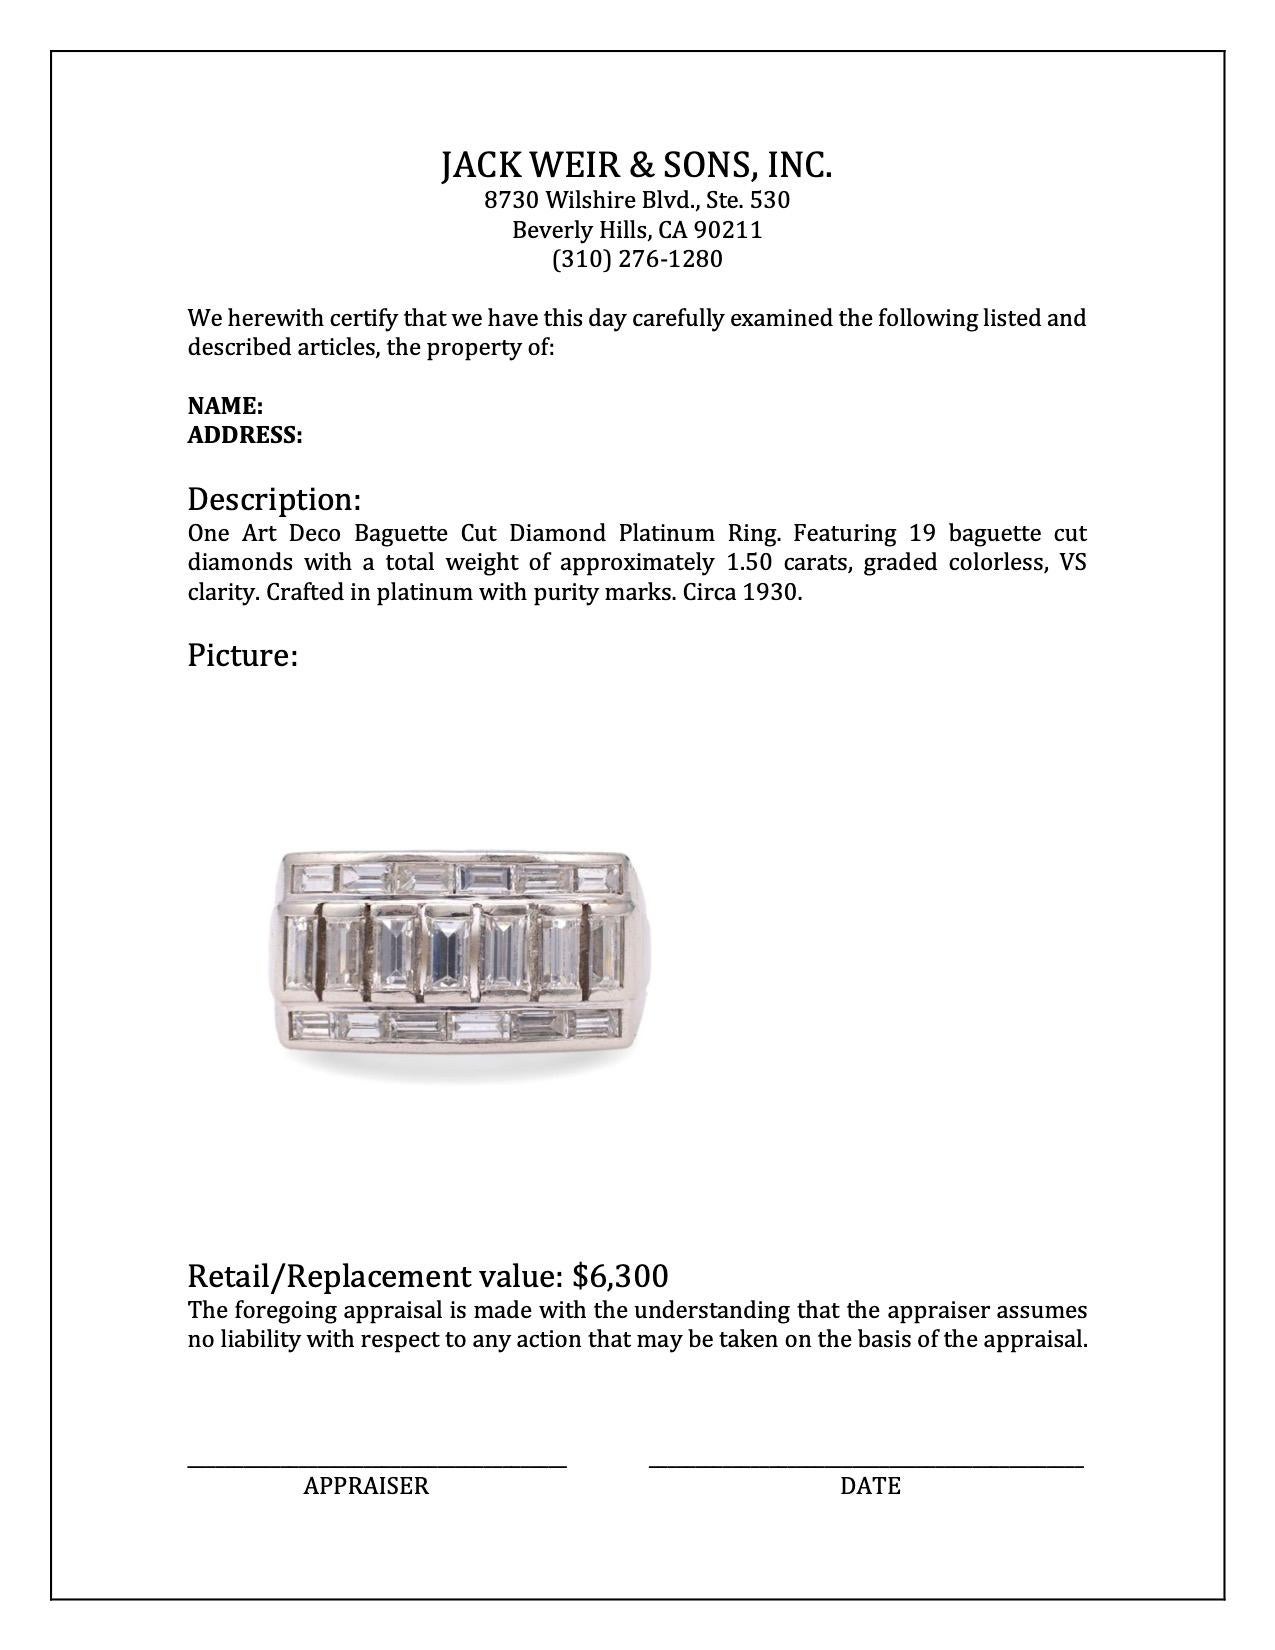 Art Deco Baguette Cut Diamond Platinum Ring 1